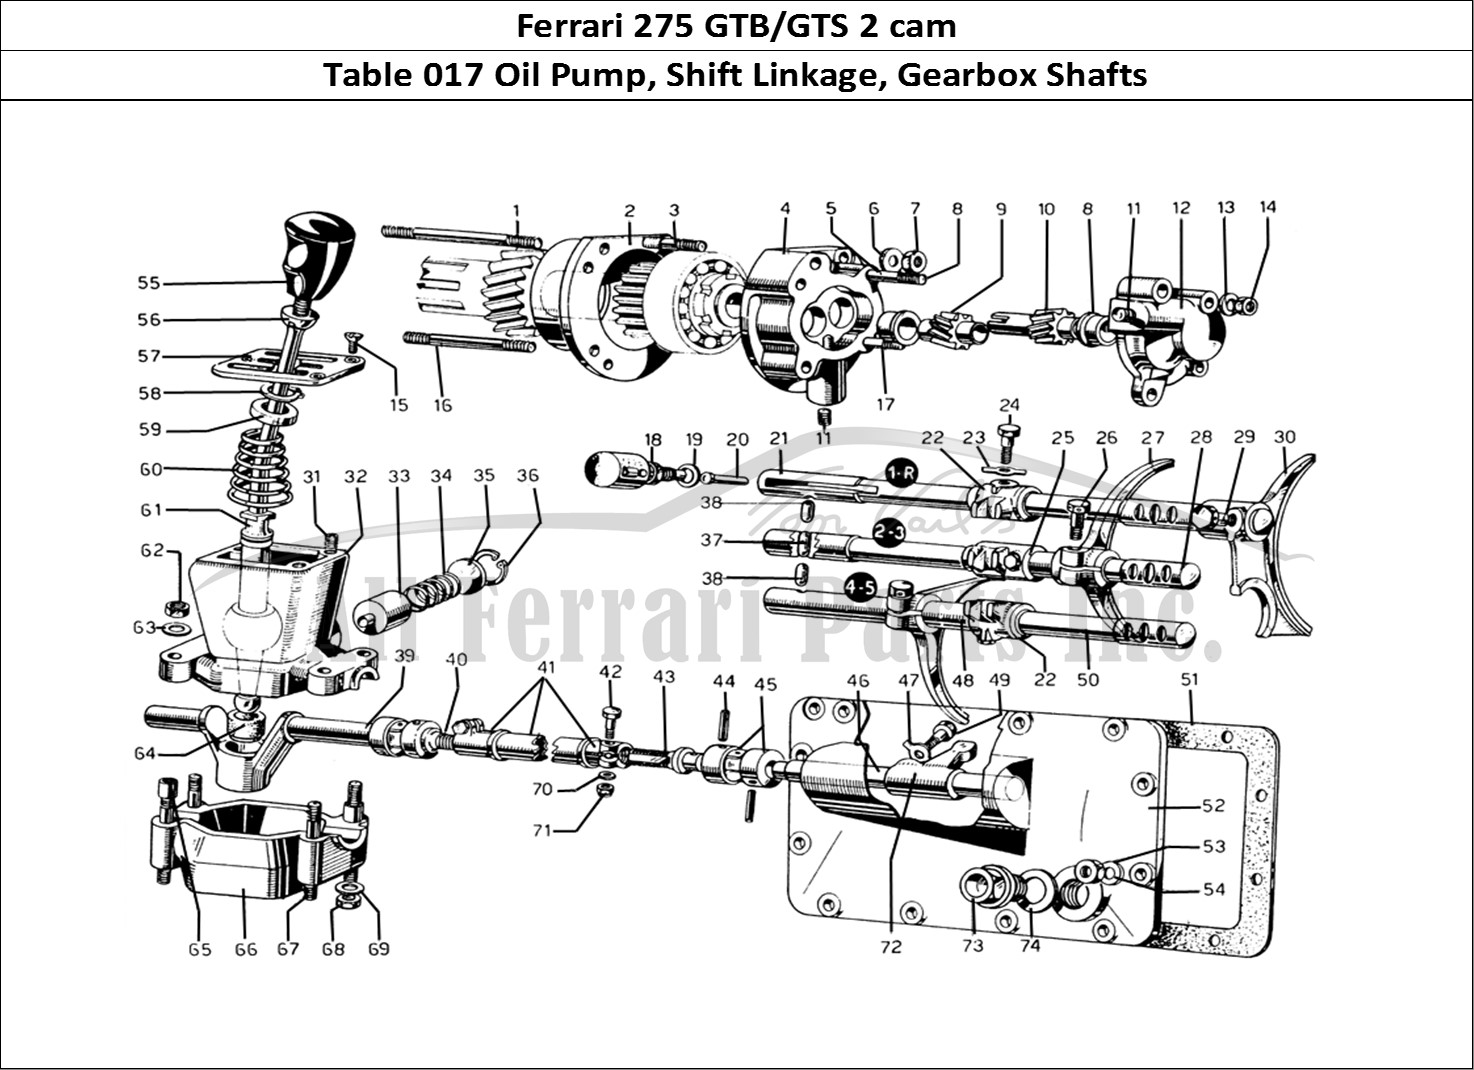 Ferrari Parts Ferrari 275 GTB/GTS 2 cam Page 017 Oil Pump & Linkage